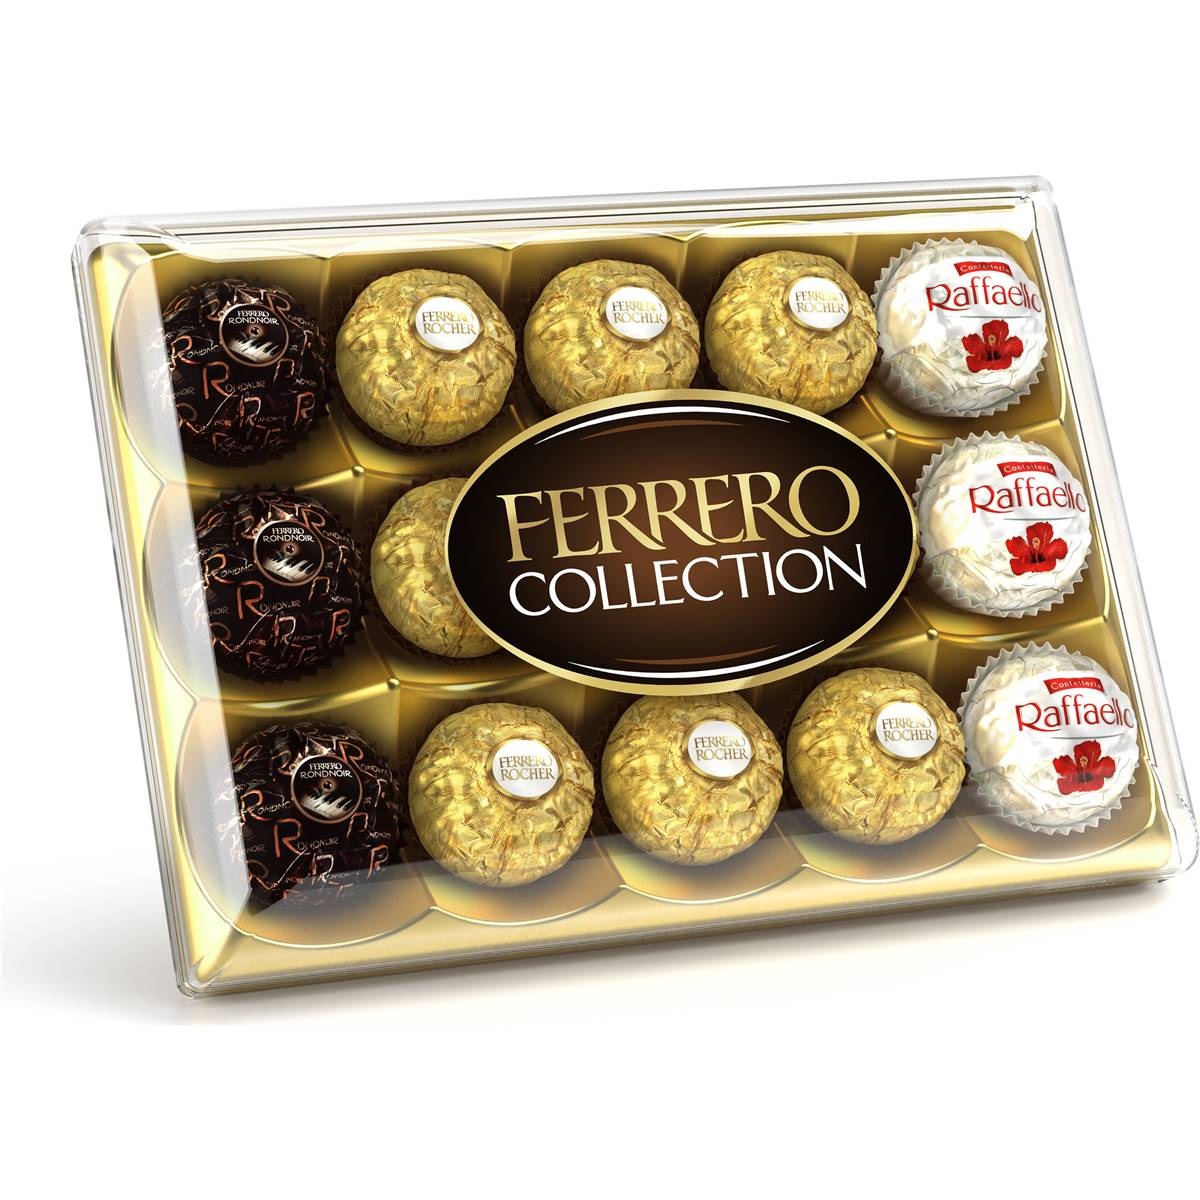 Ferrero Collection Chocolates T15 Rocher Rondnoir ...